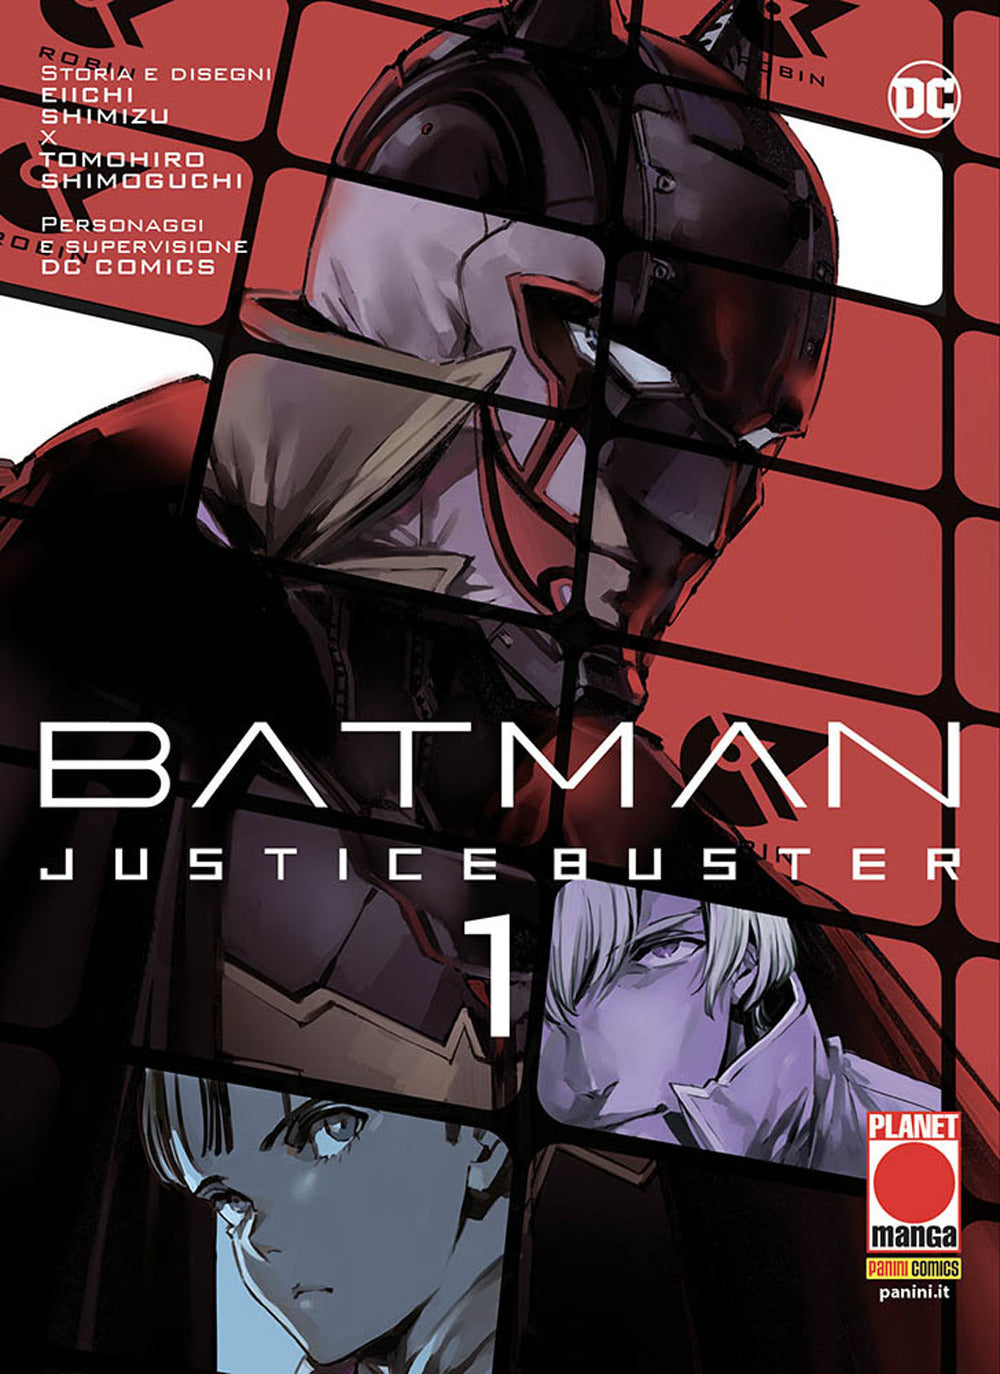 Justice buster. Batman